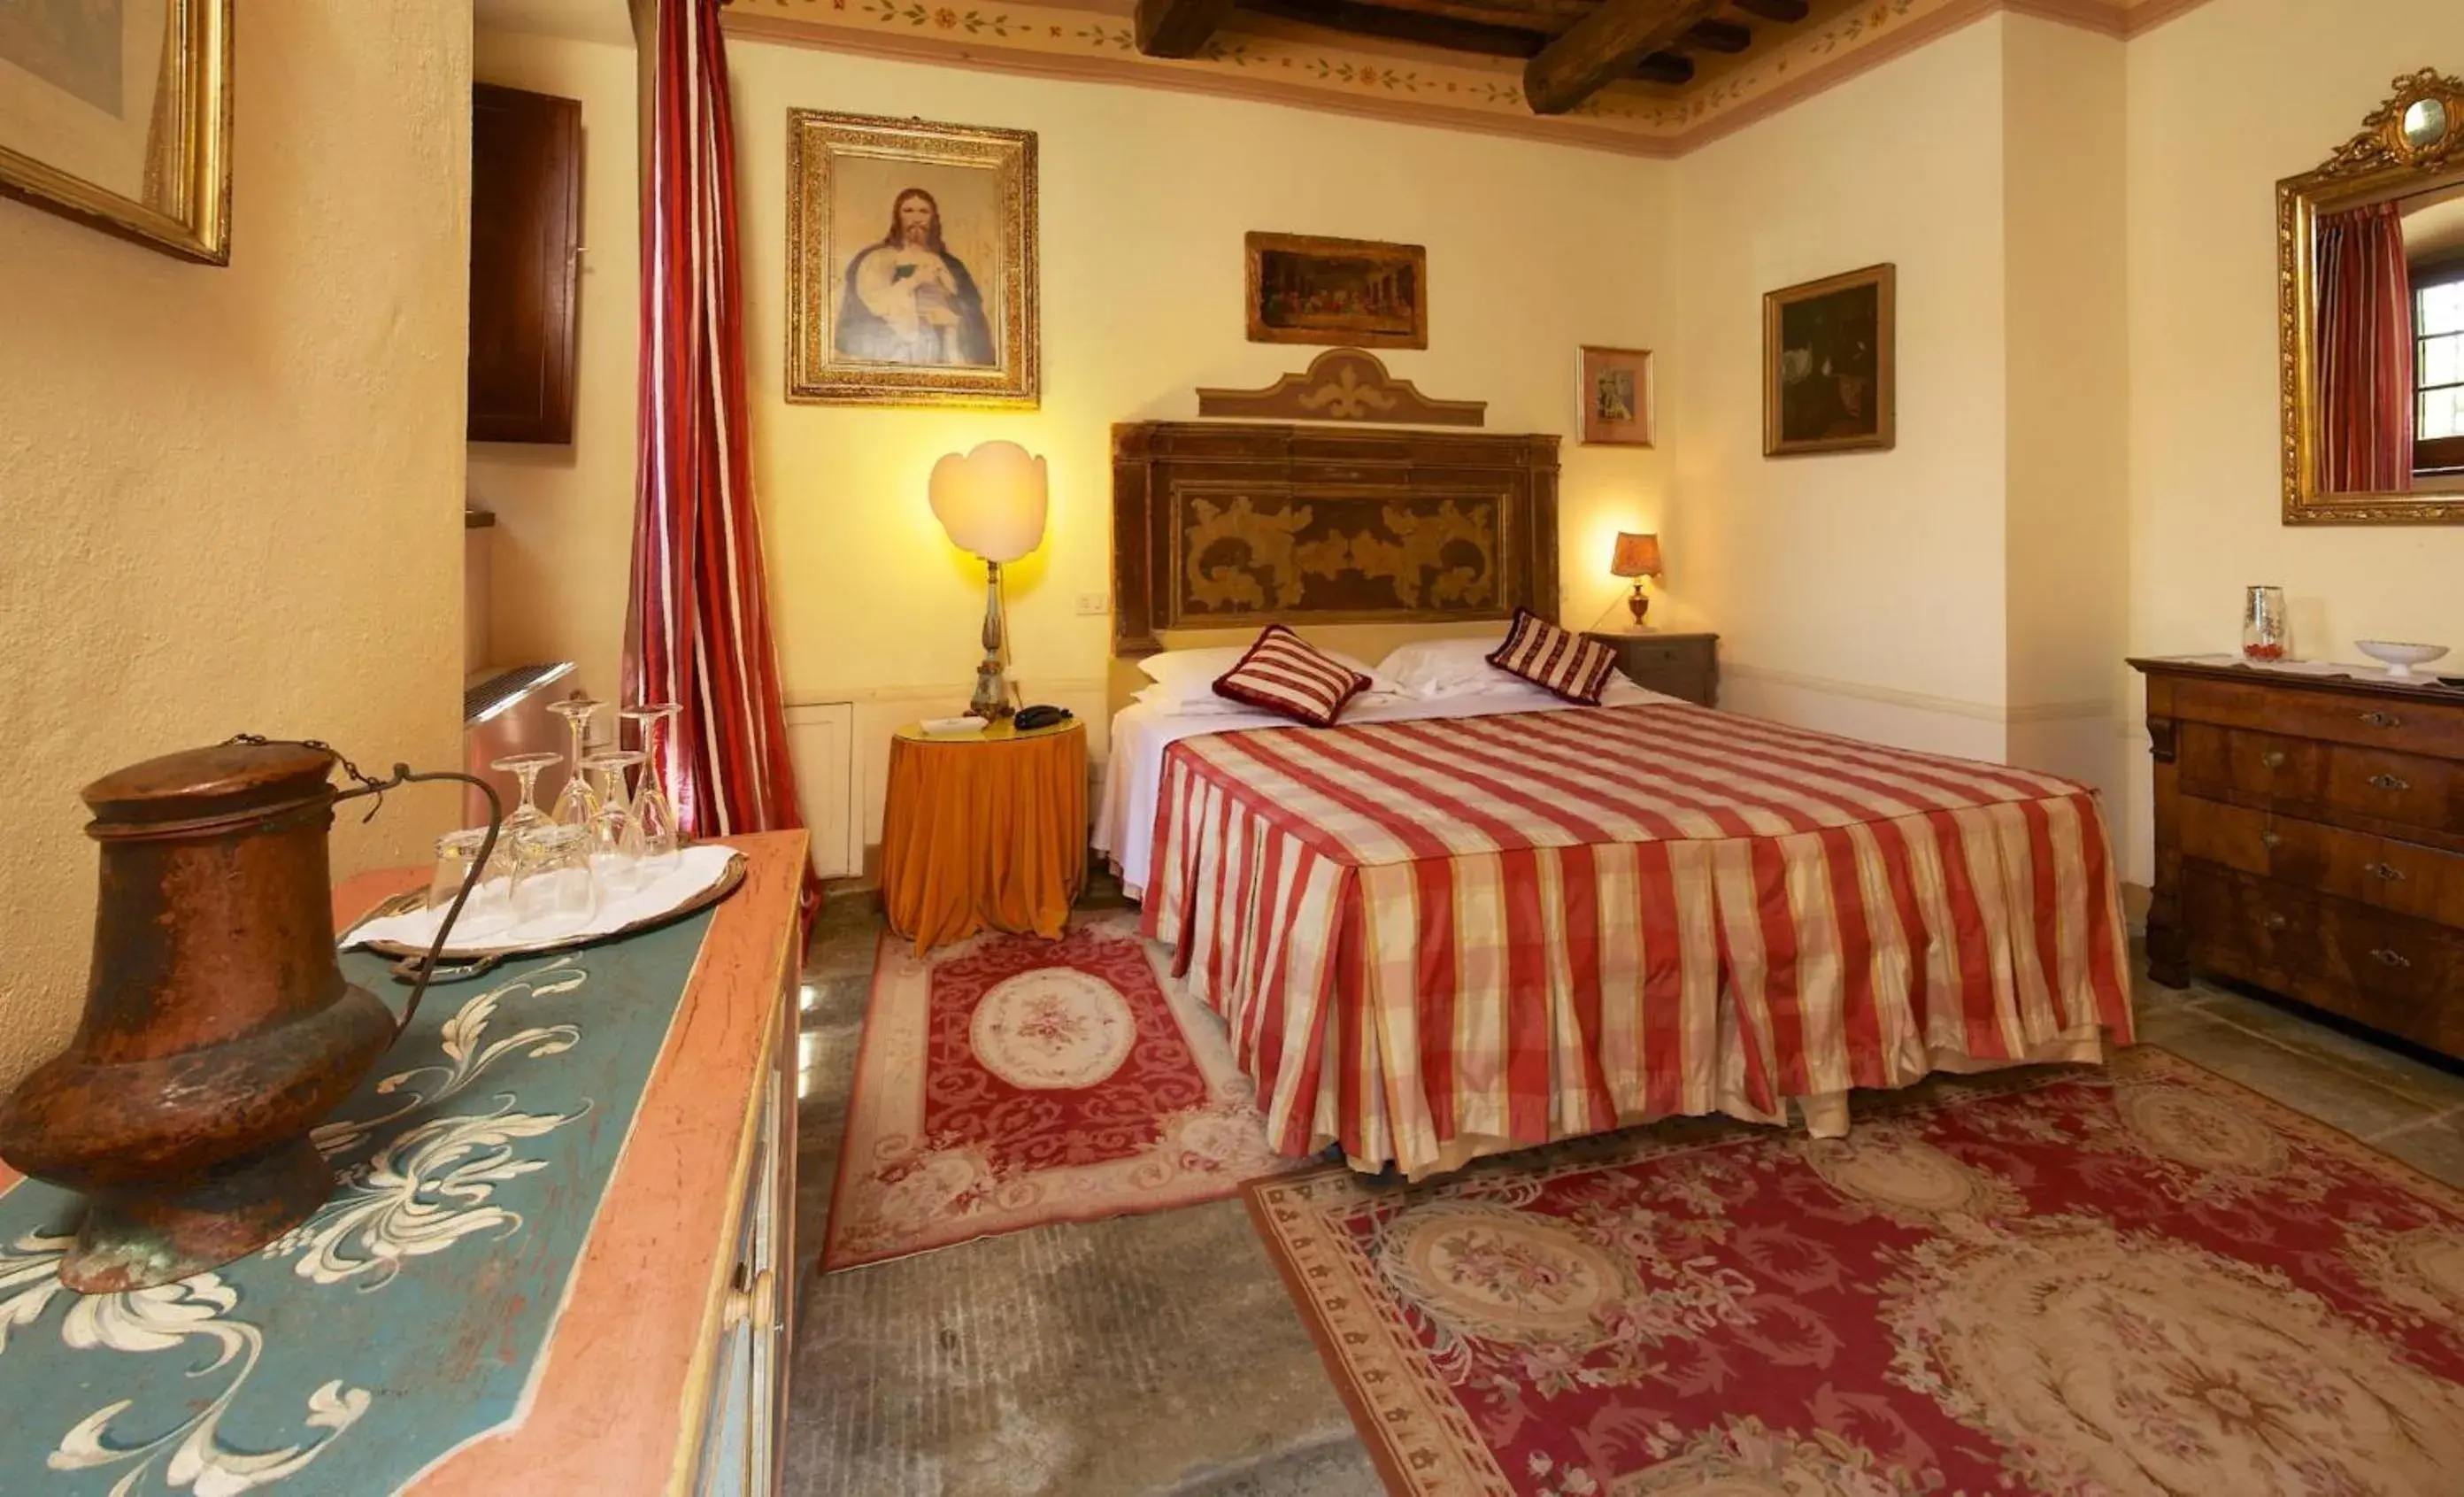 Bed, Room Photo in Relais Villa Baldelli